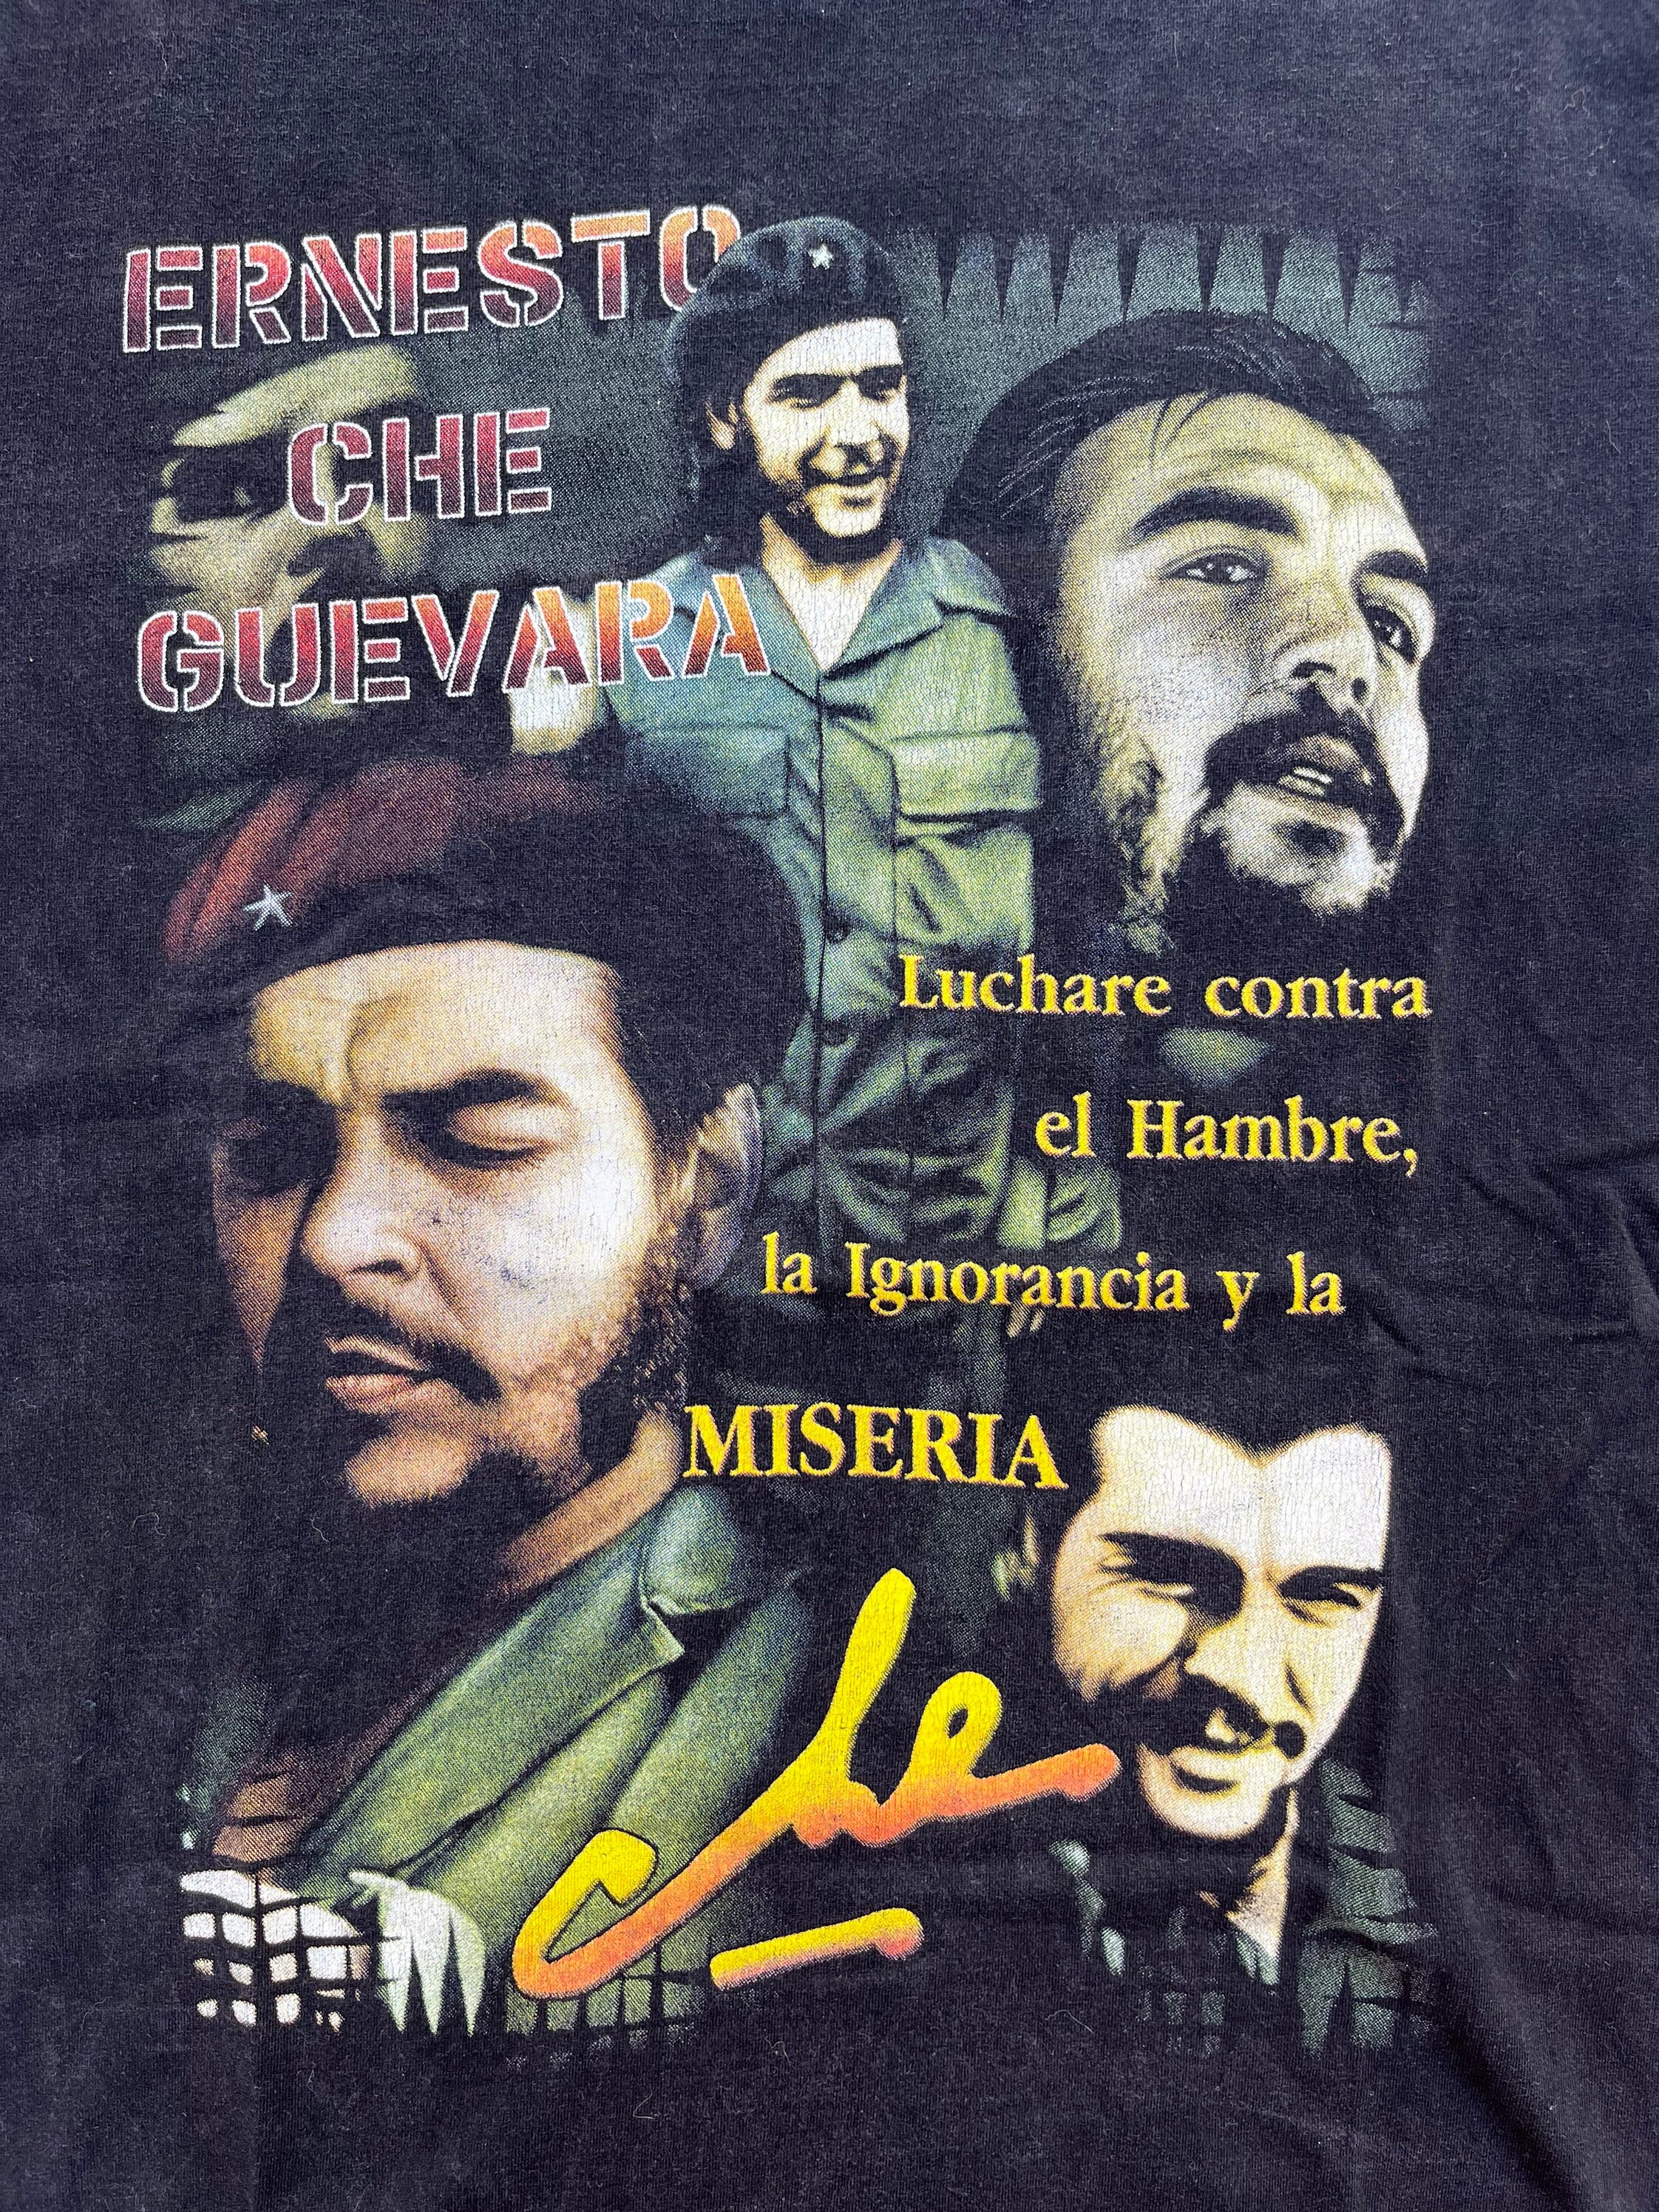 Discover Che Guevara T-Shirt